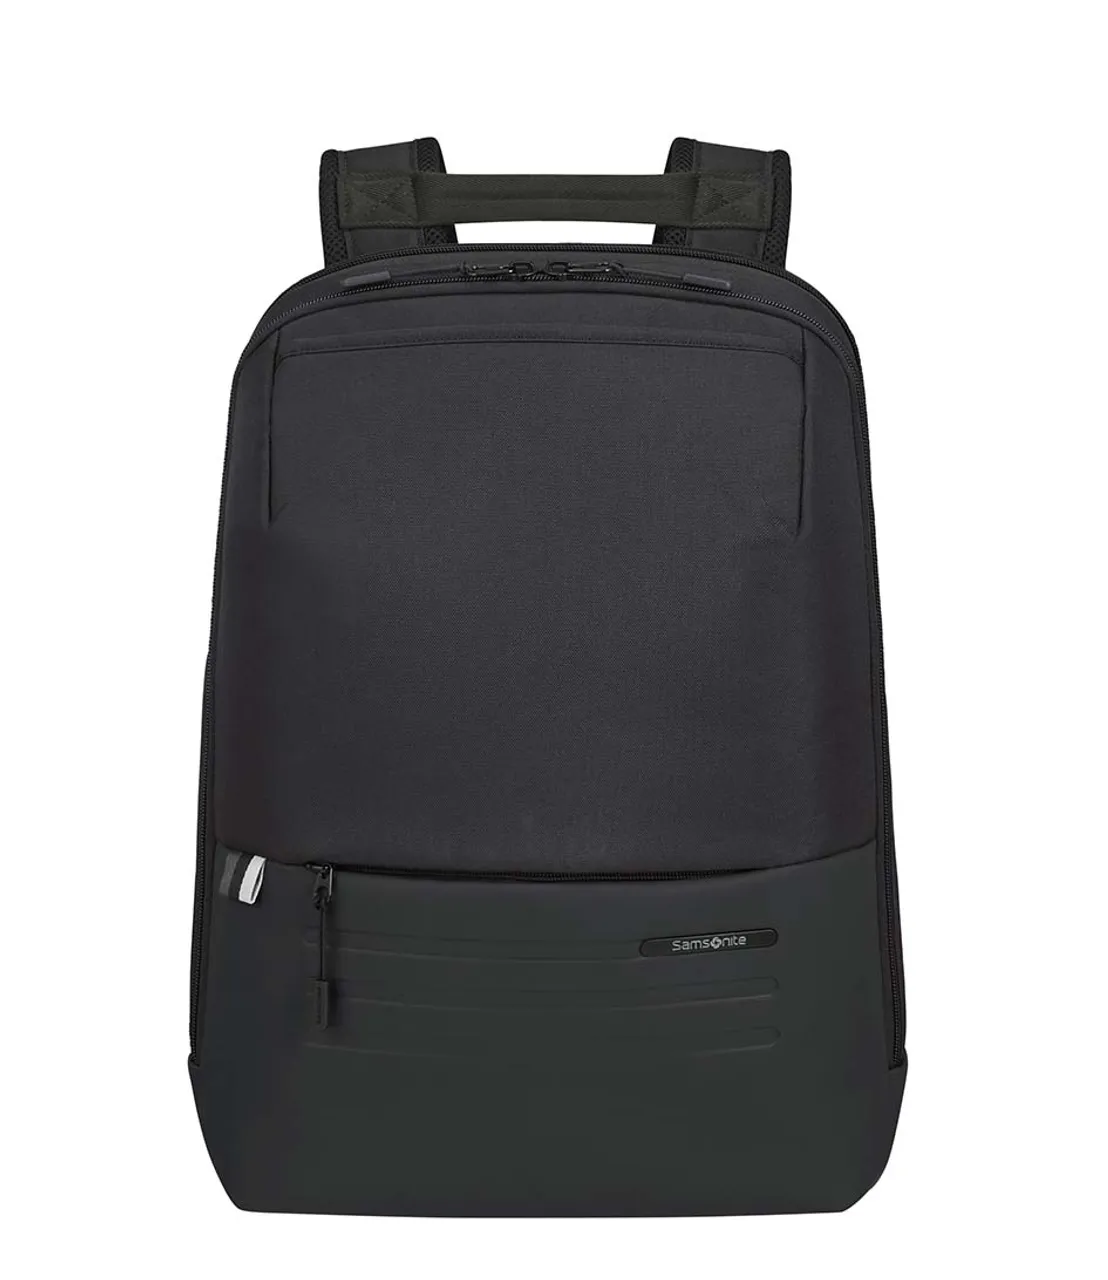 Stackd Biz Laptop Backpack 15.6 Inch